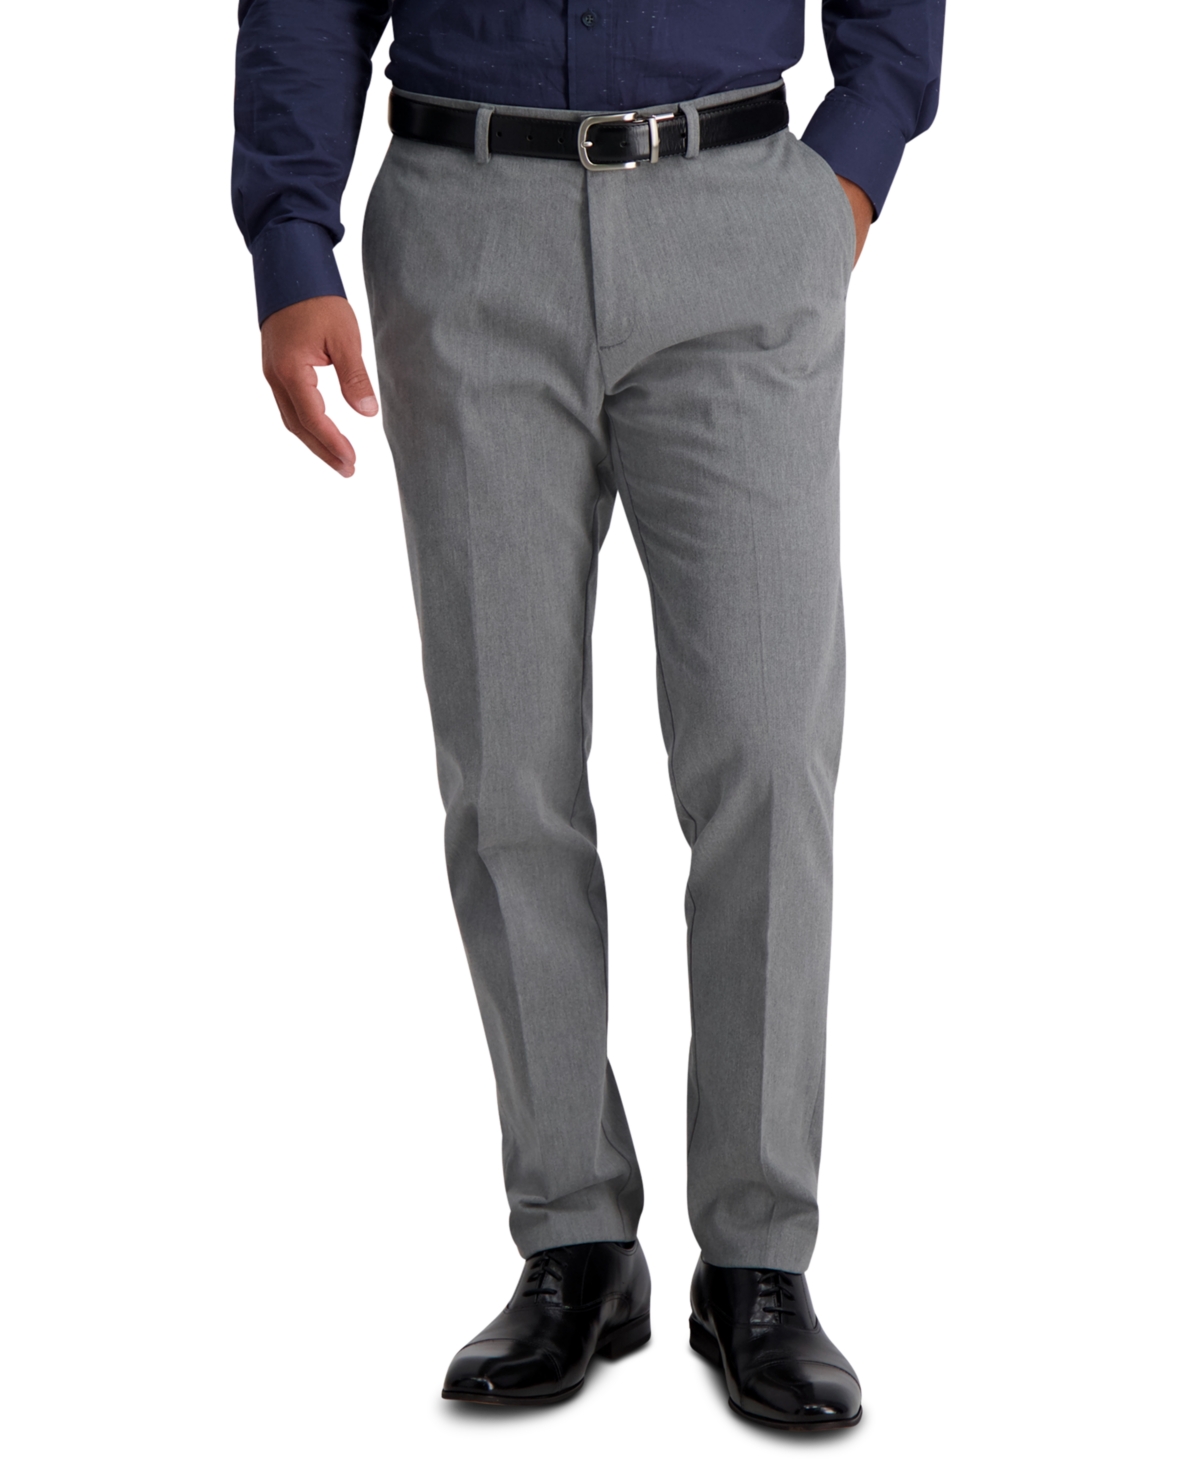 Men's Iron Free Premium Khaki Slim-Fit Flat-Front Pant - Heather Grey